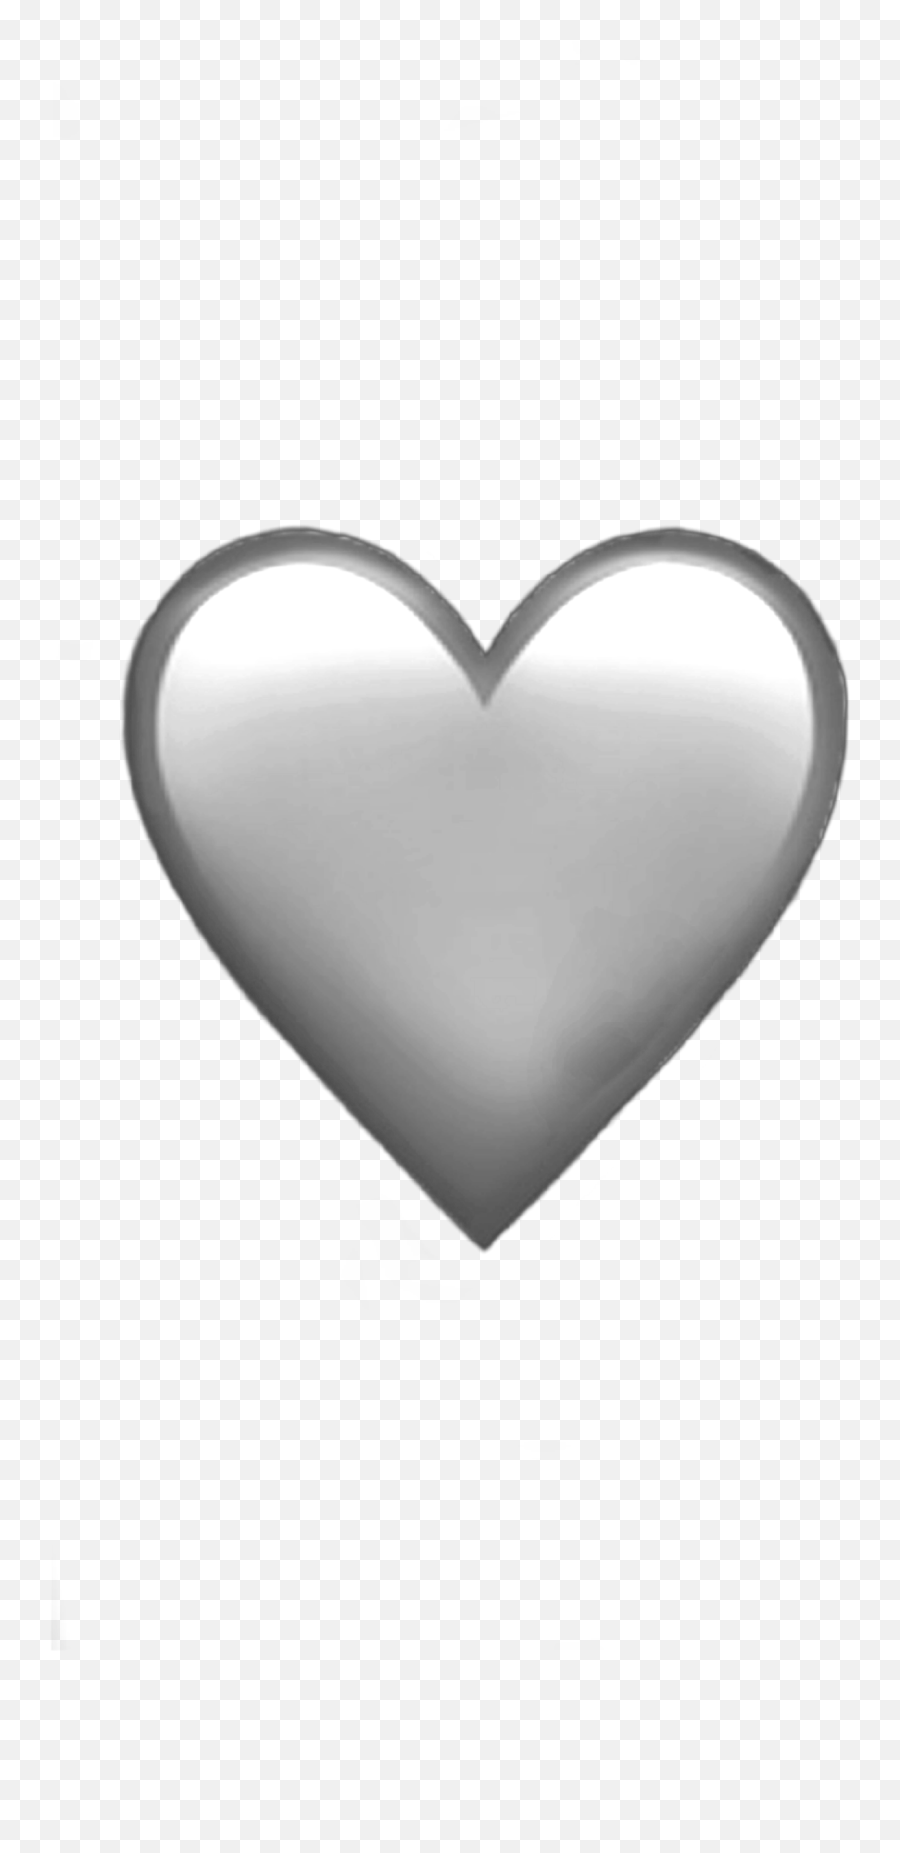 The Most Edited Emoji Picsart,Emoticon Love Hitam Android